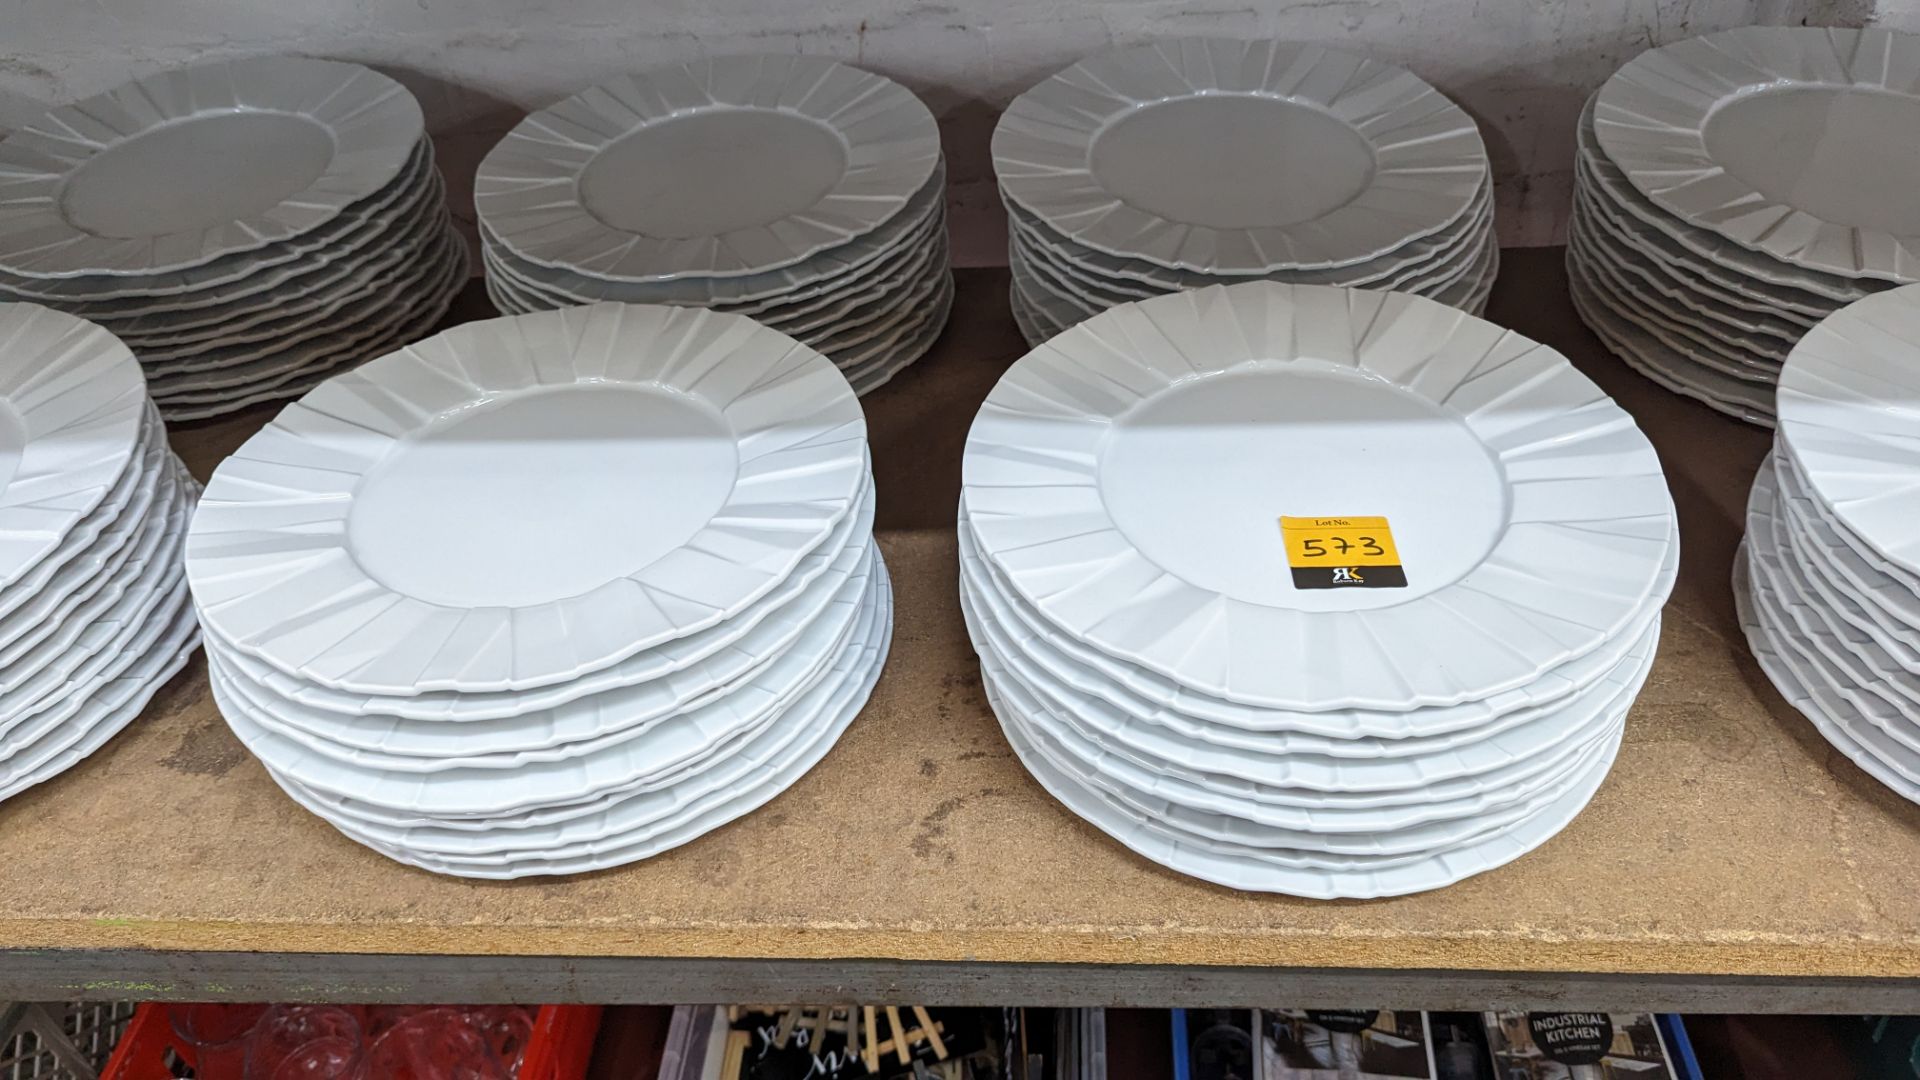 40 off Vista Alegre 330mm round plates with sculptured edging to the rim